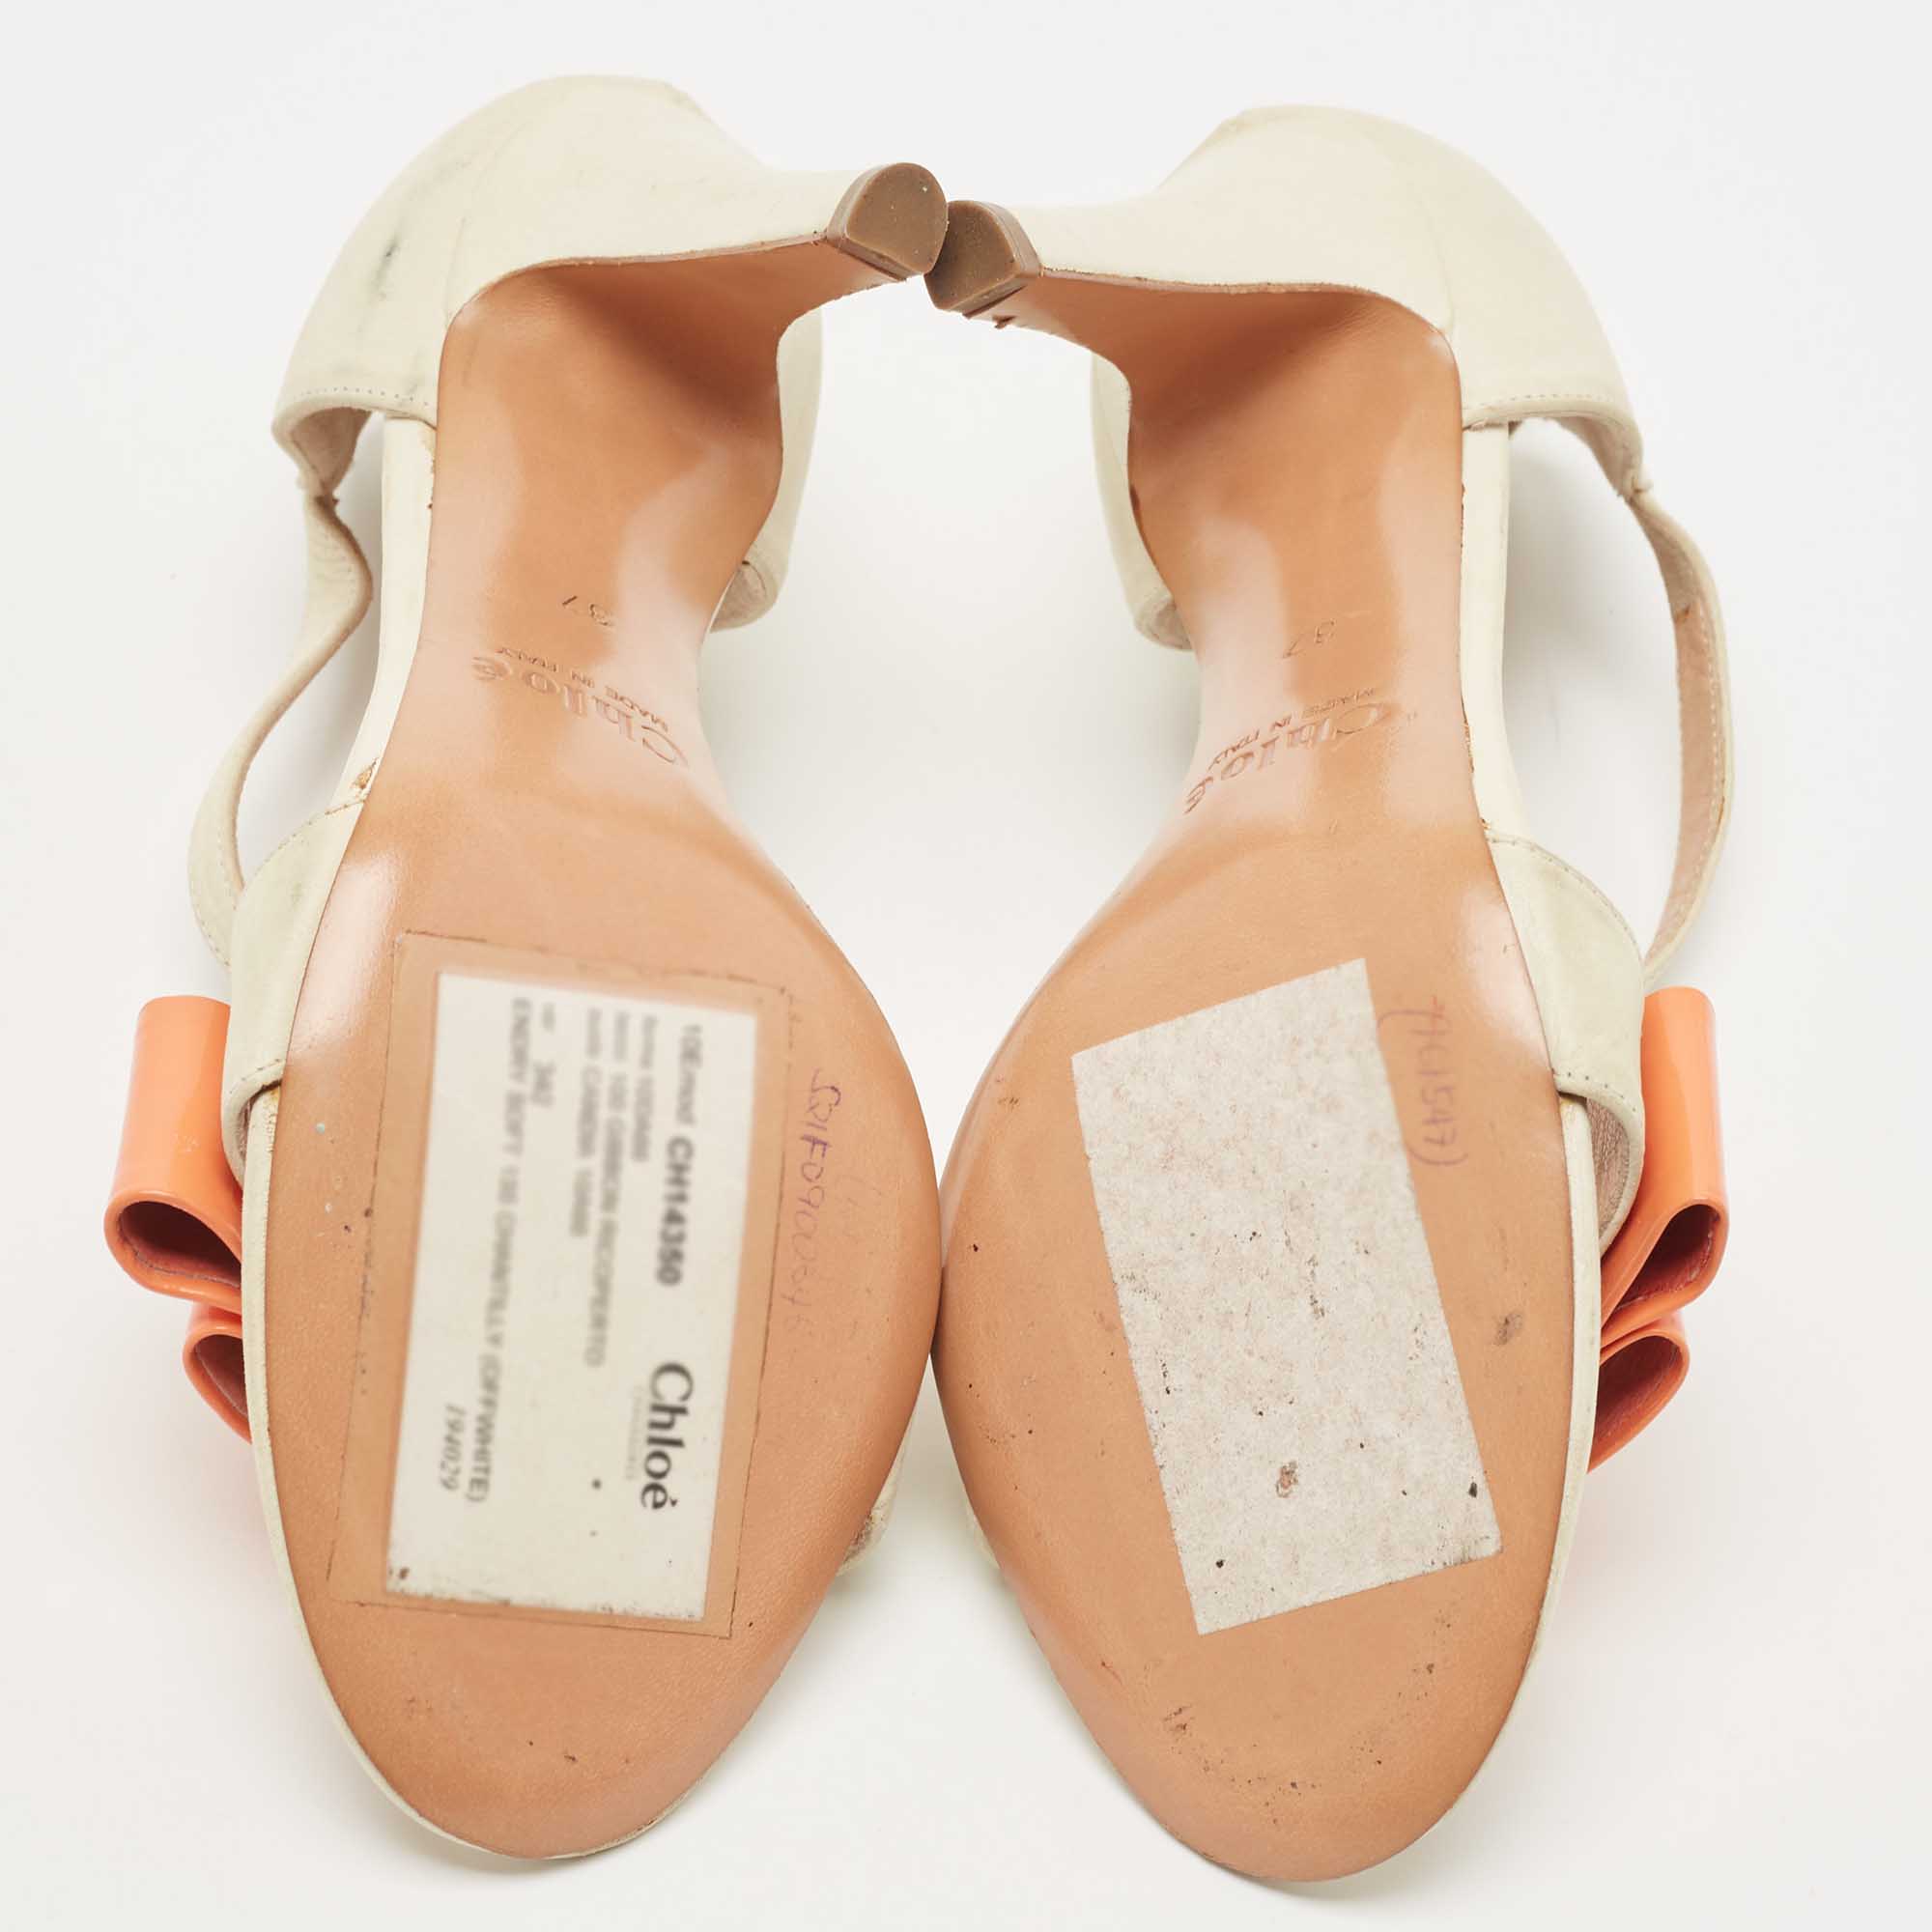 Chloe Cream Nubuck Leather Ankle Strap Sandals Size 37